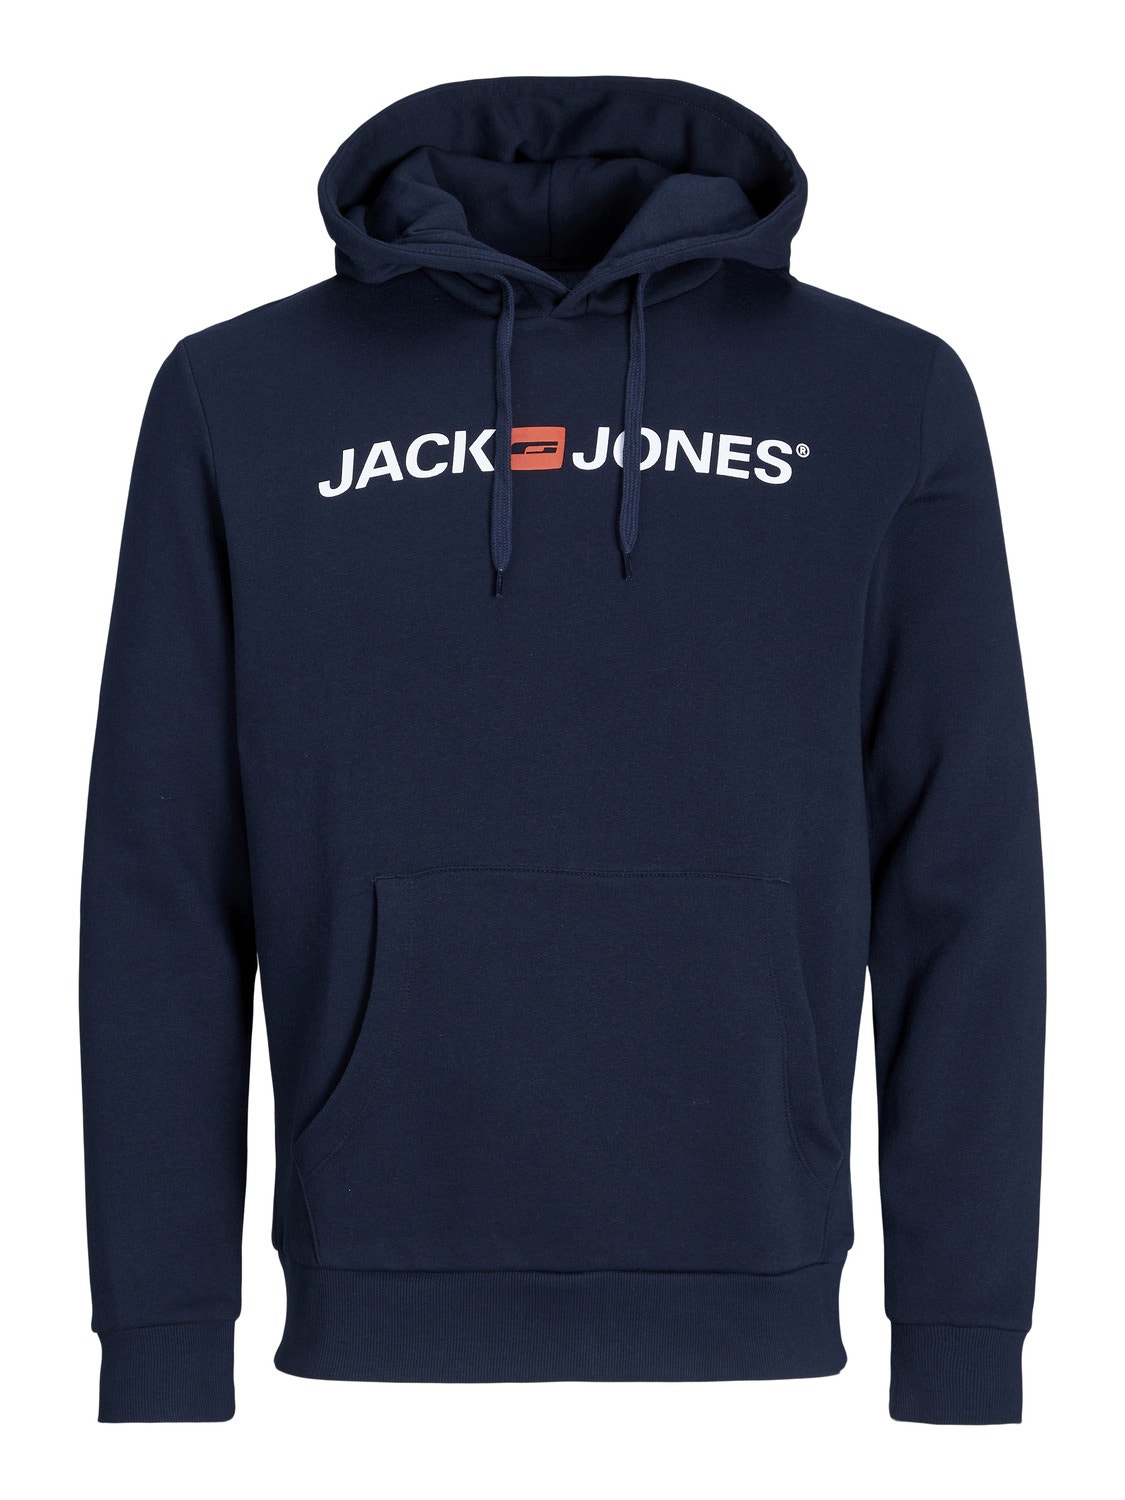 Jack & Jones Logo Huppari -Navy Blazer - 12137054